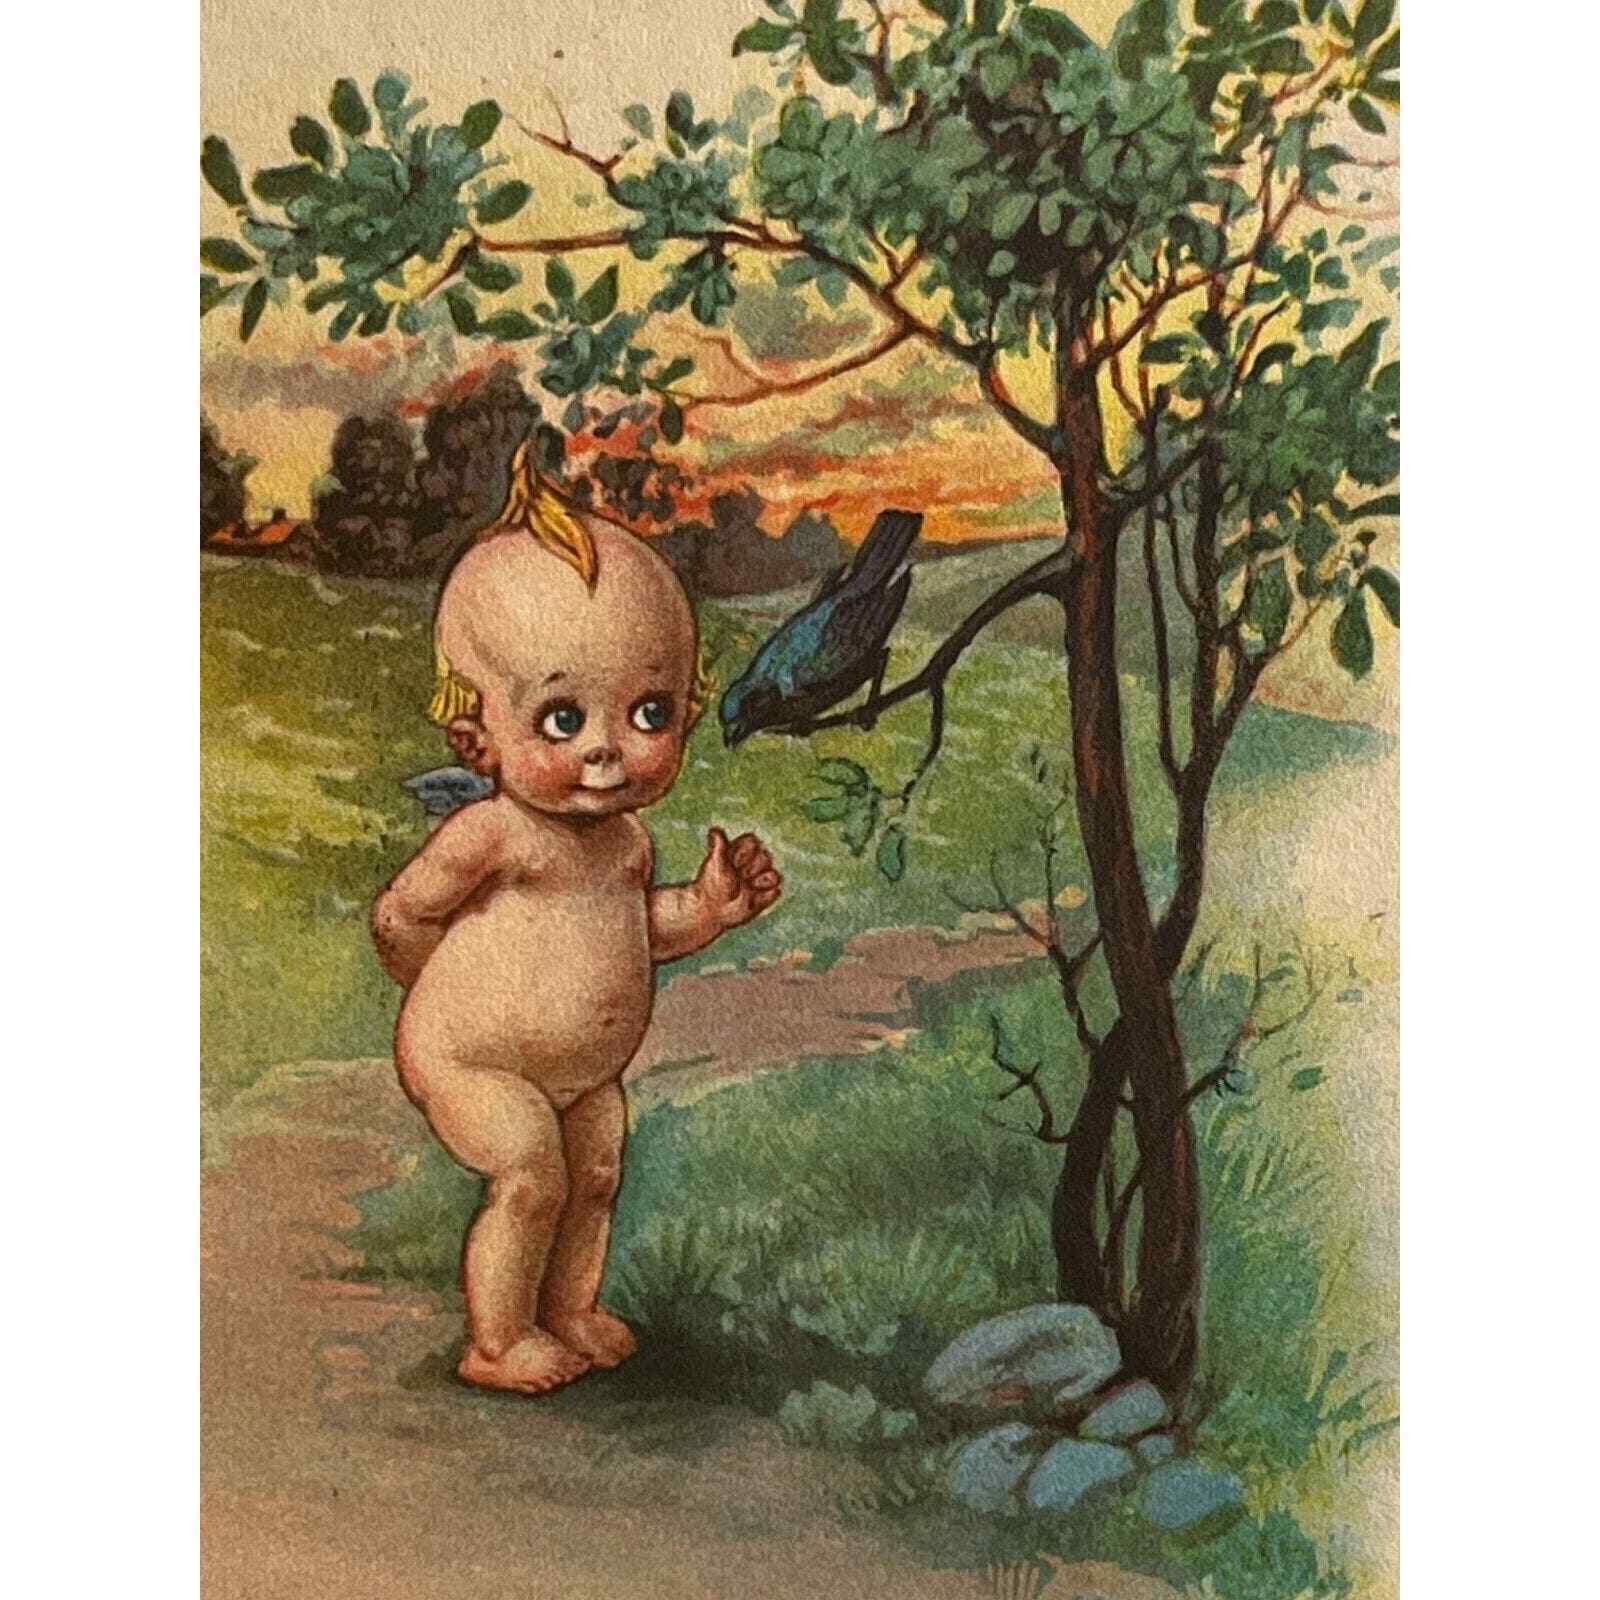 Antique 1916 Ephemera Gartner & Bender Postcard Humorous “Kewpie” Baby Raven SEE